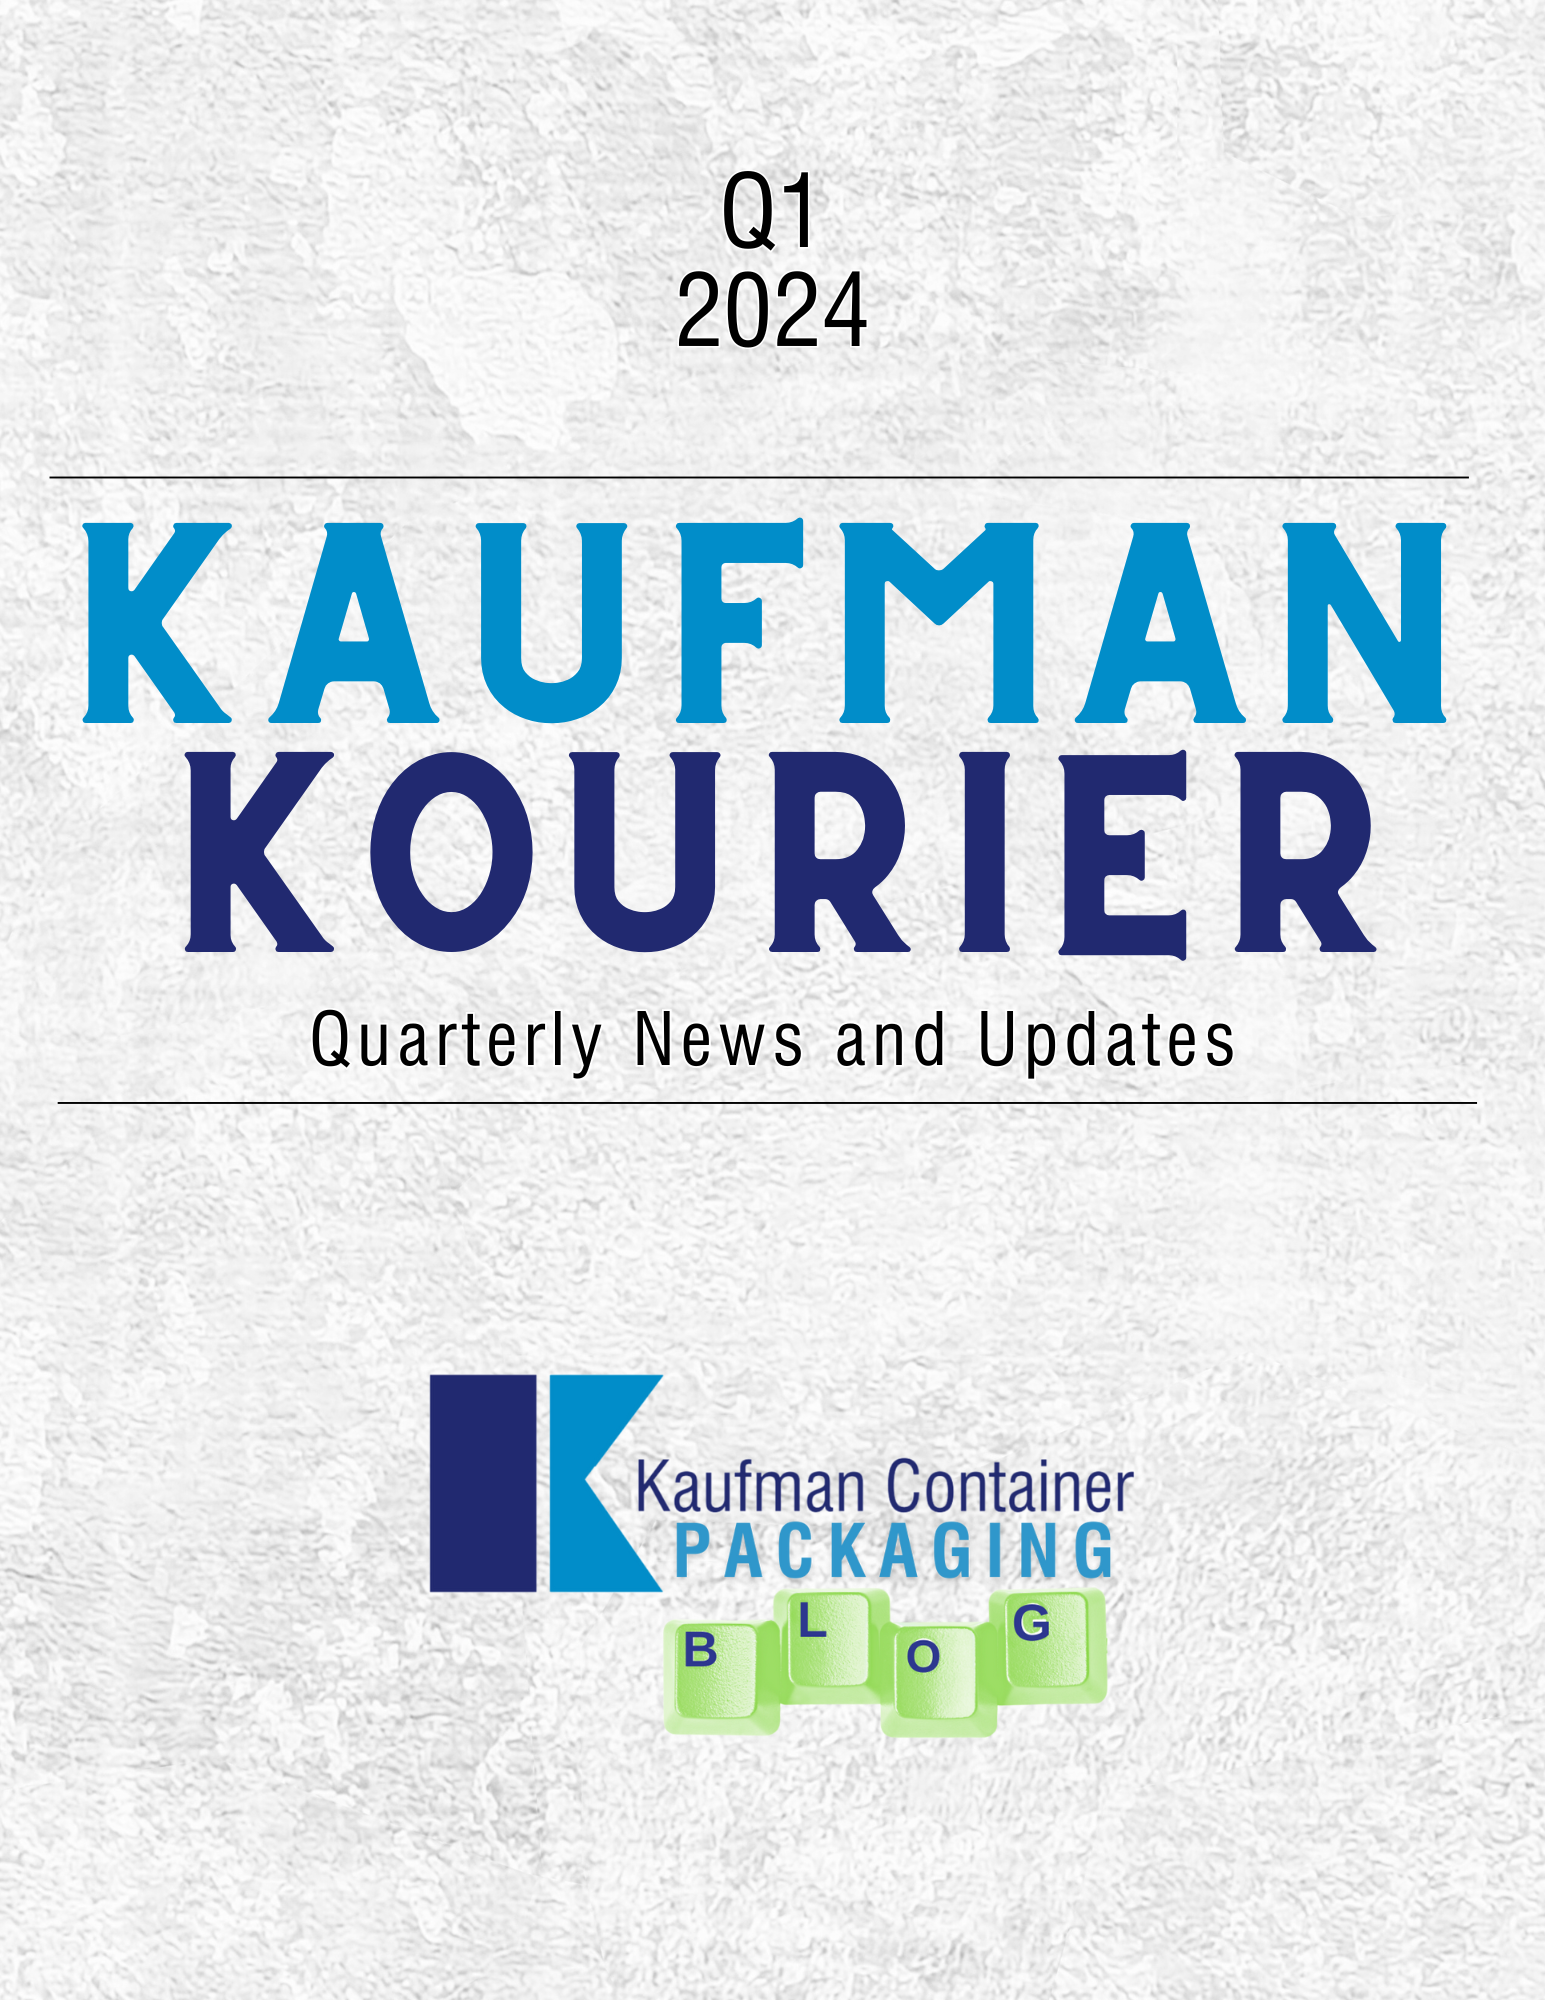 Kaufman Kourier Q1 Recap: A Snapshot of the 1st Quarter in 2024